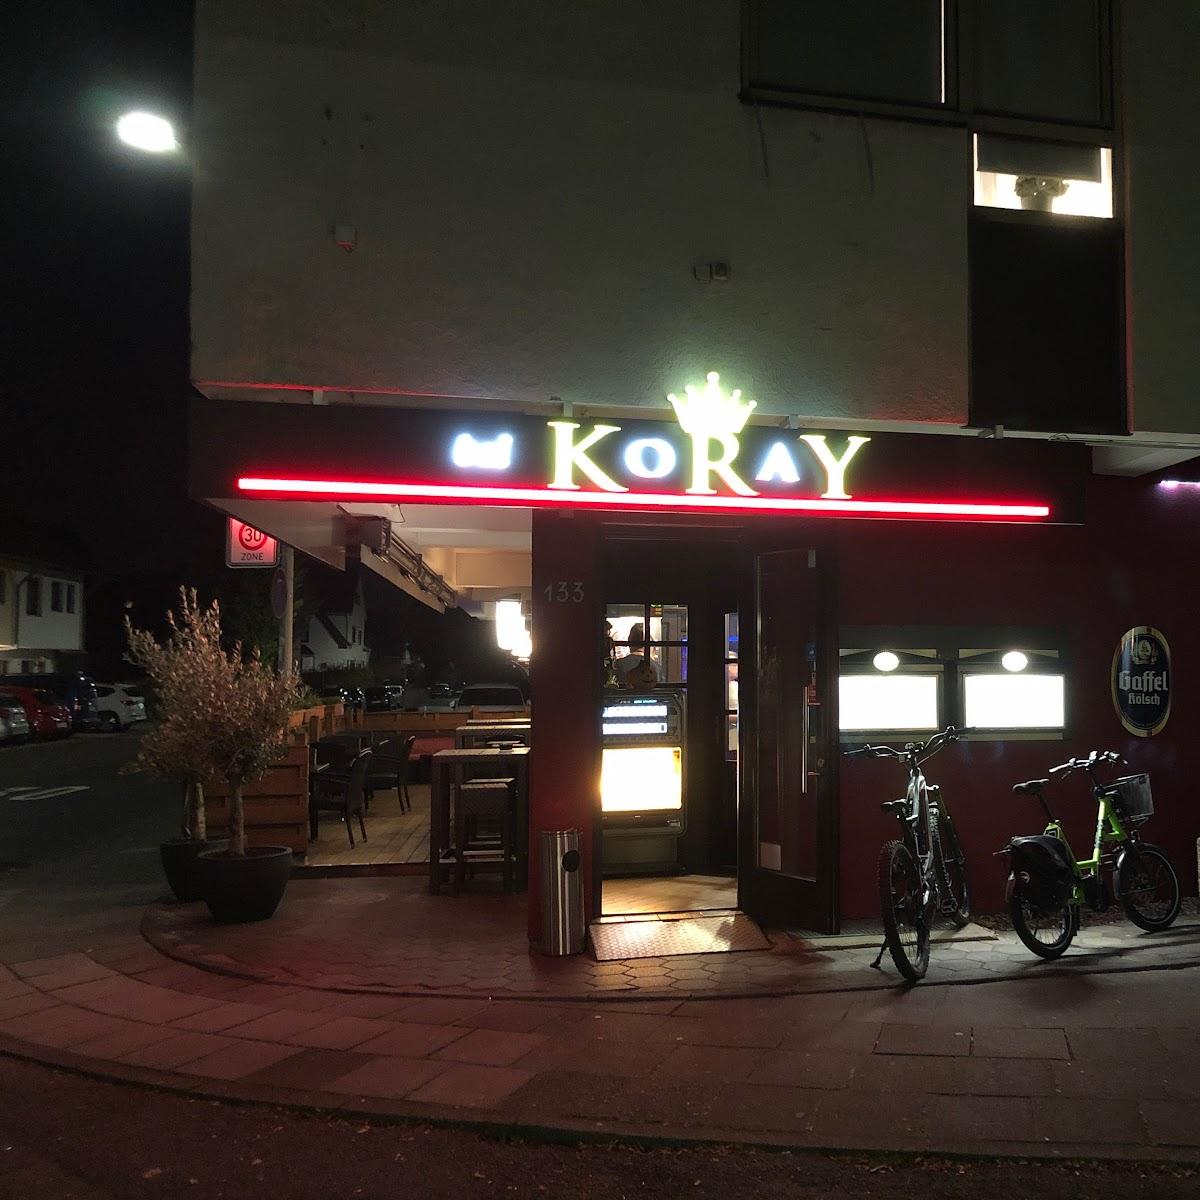 Restaurant "Bei Koray" in Wesseling